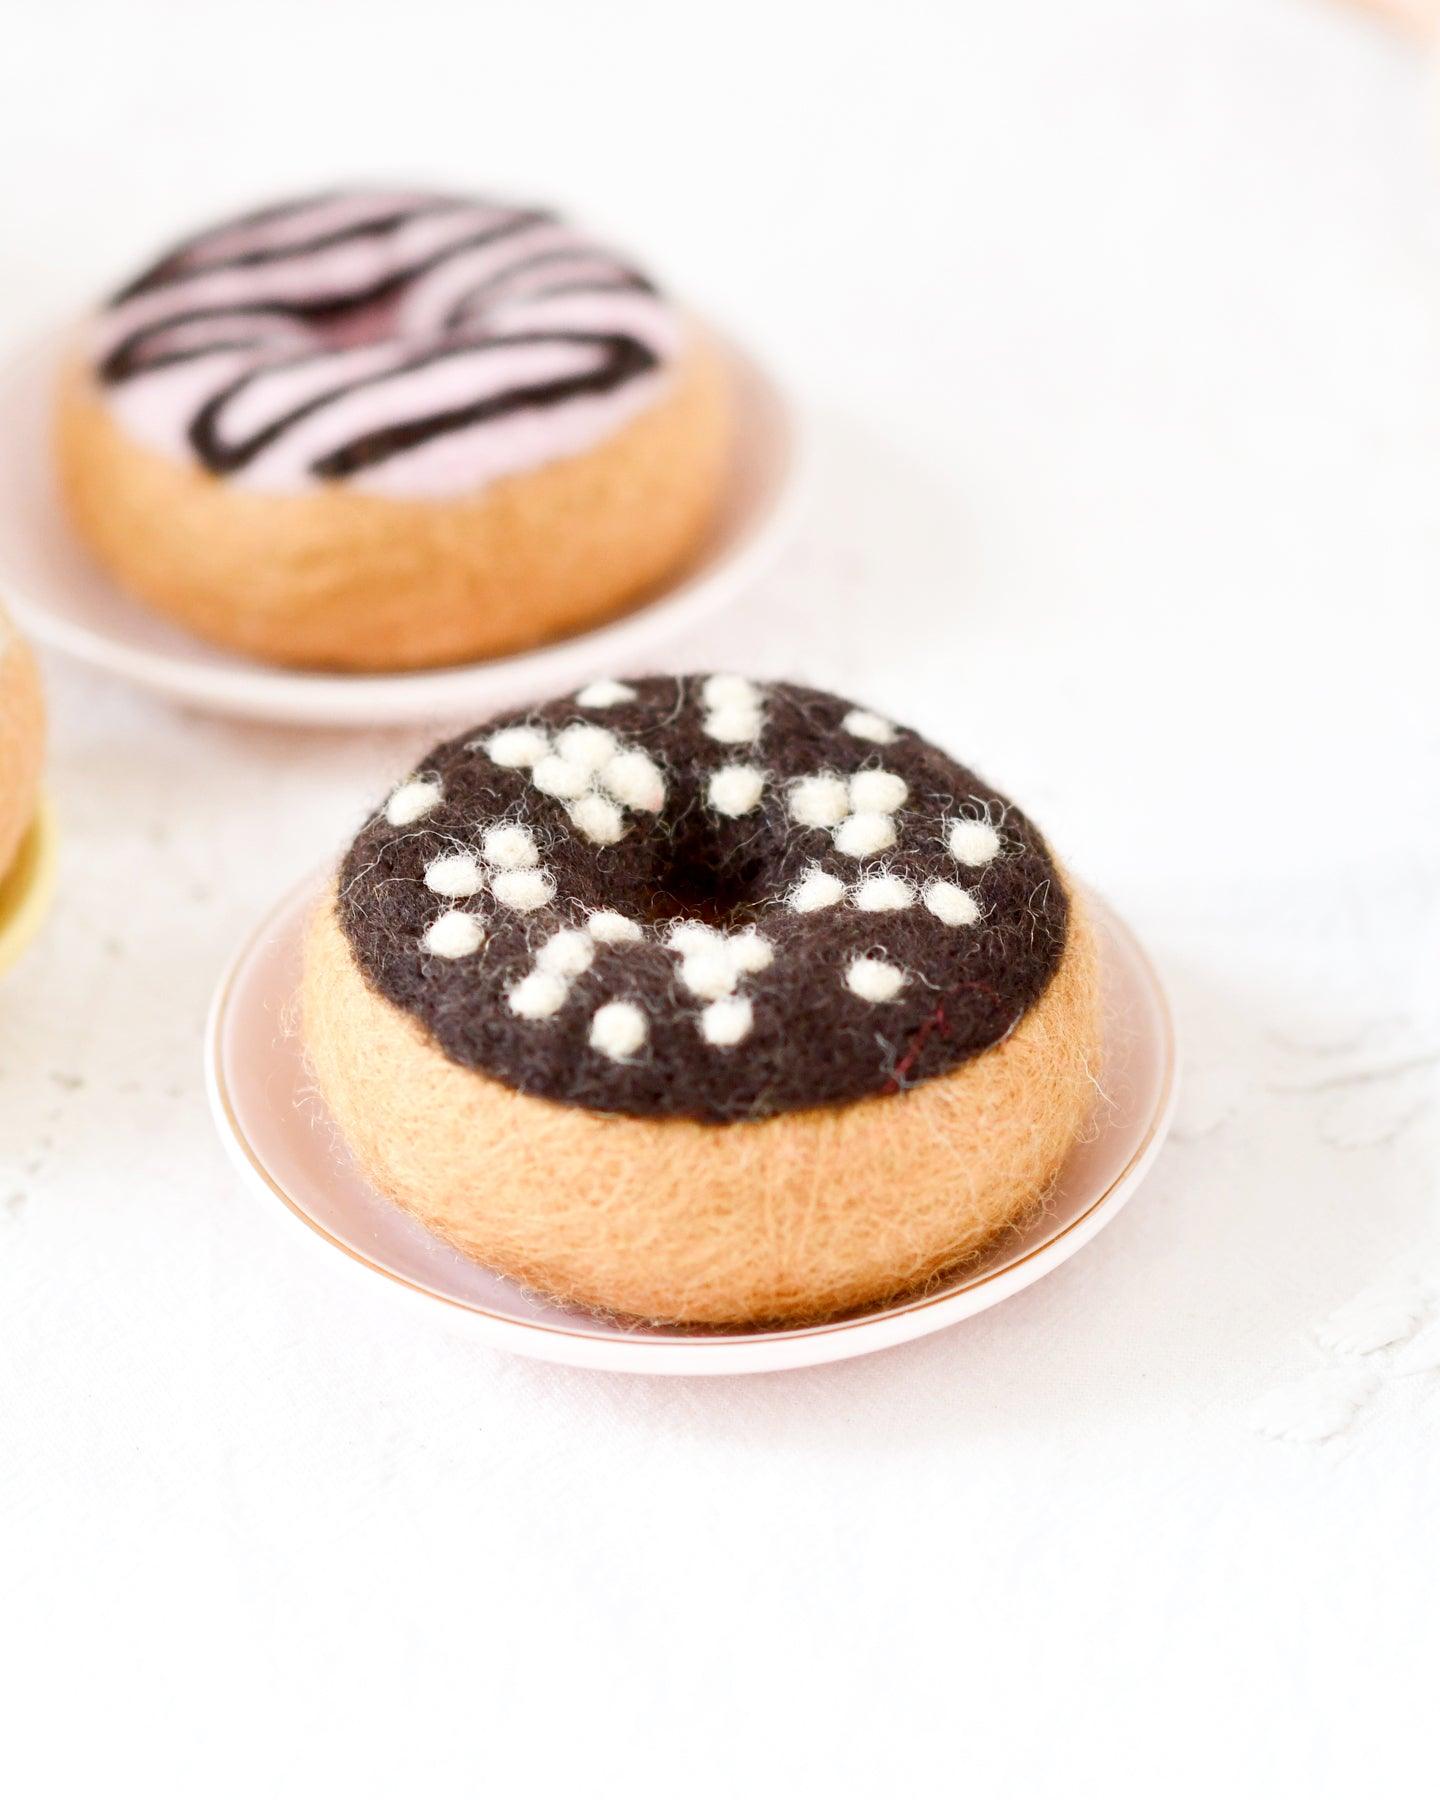 Felt Doughnut (Donut) with Chocolate Frosting and Nuts - Tara Treasures